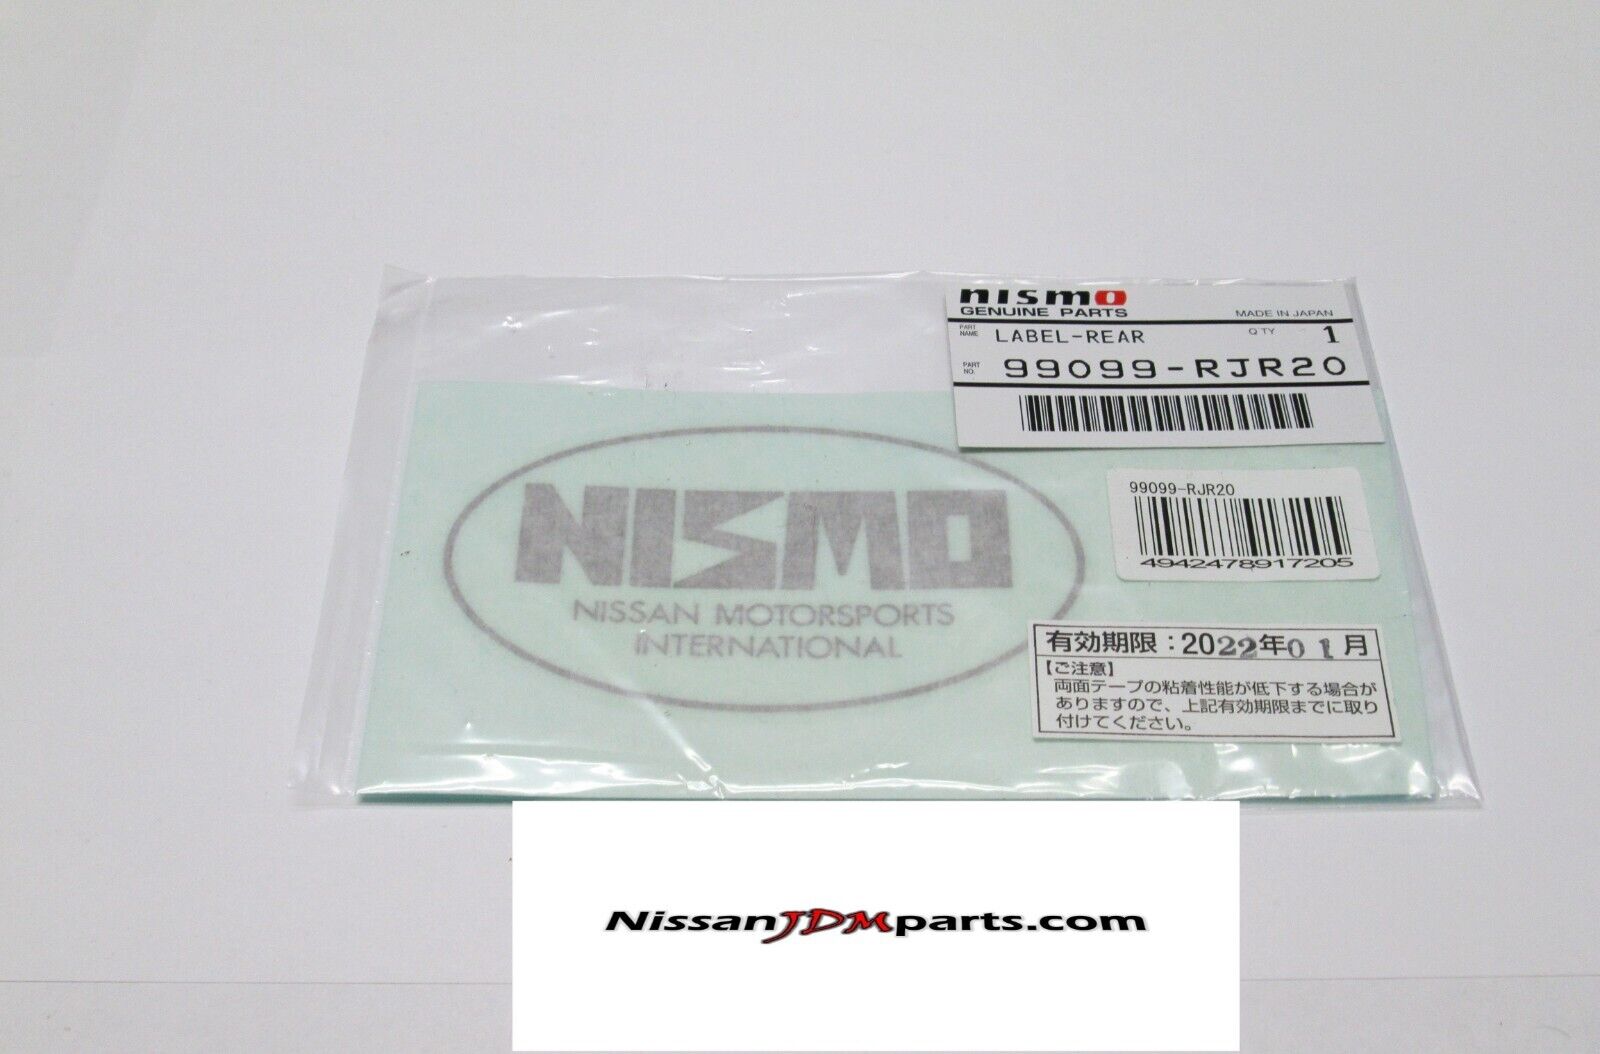 NISSAN NISMO HERITAGE  R32 Skyline GT-R NISMO Sticker 99099 - RJR20 USA SELLER